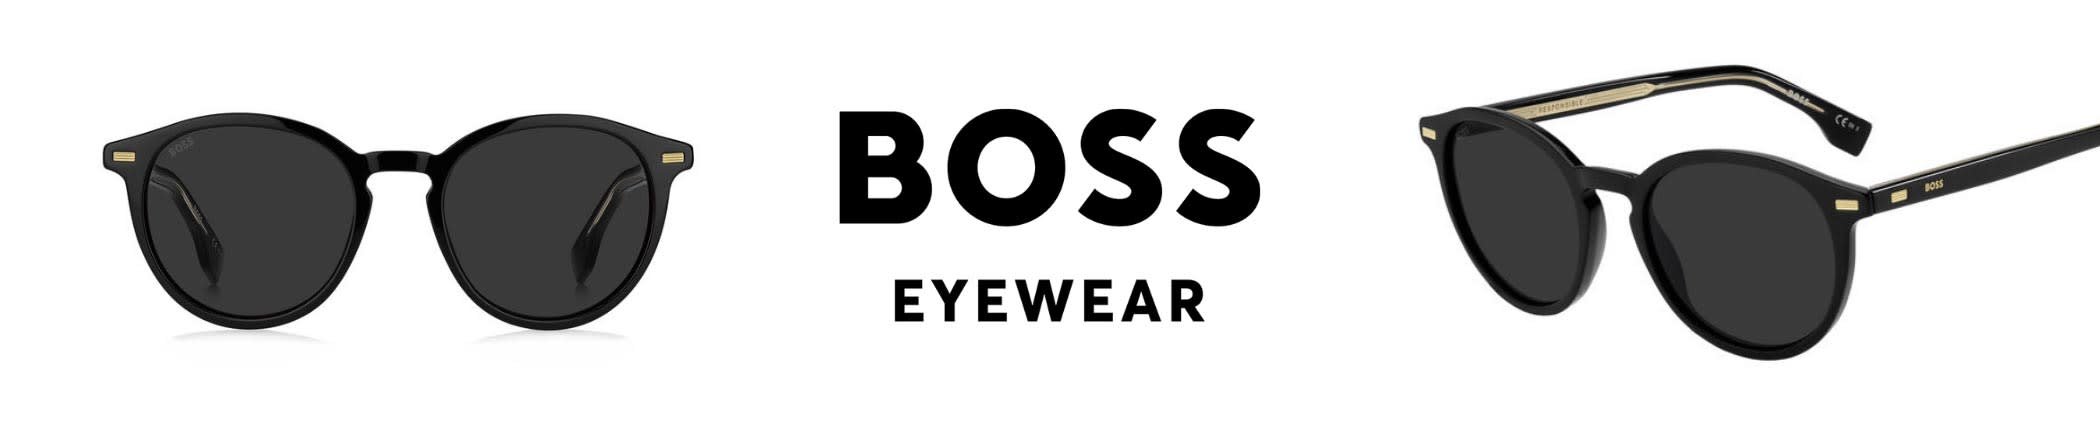 Shop Hugo Boss Sunglasses - featuring Boss 1365/S